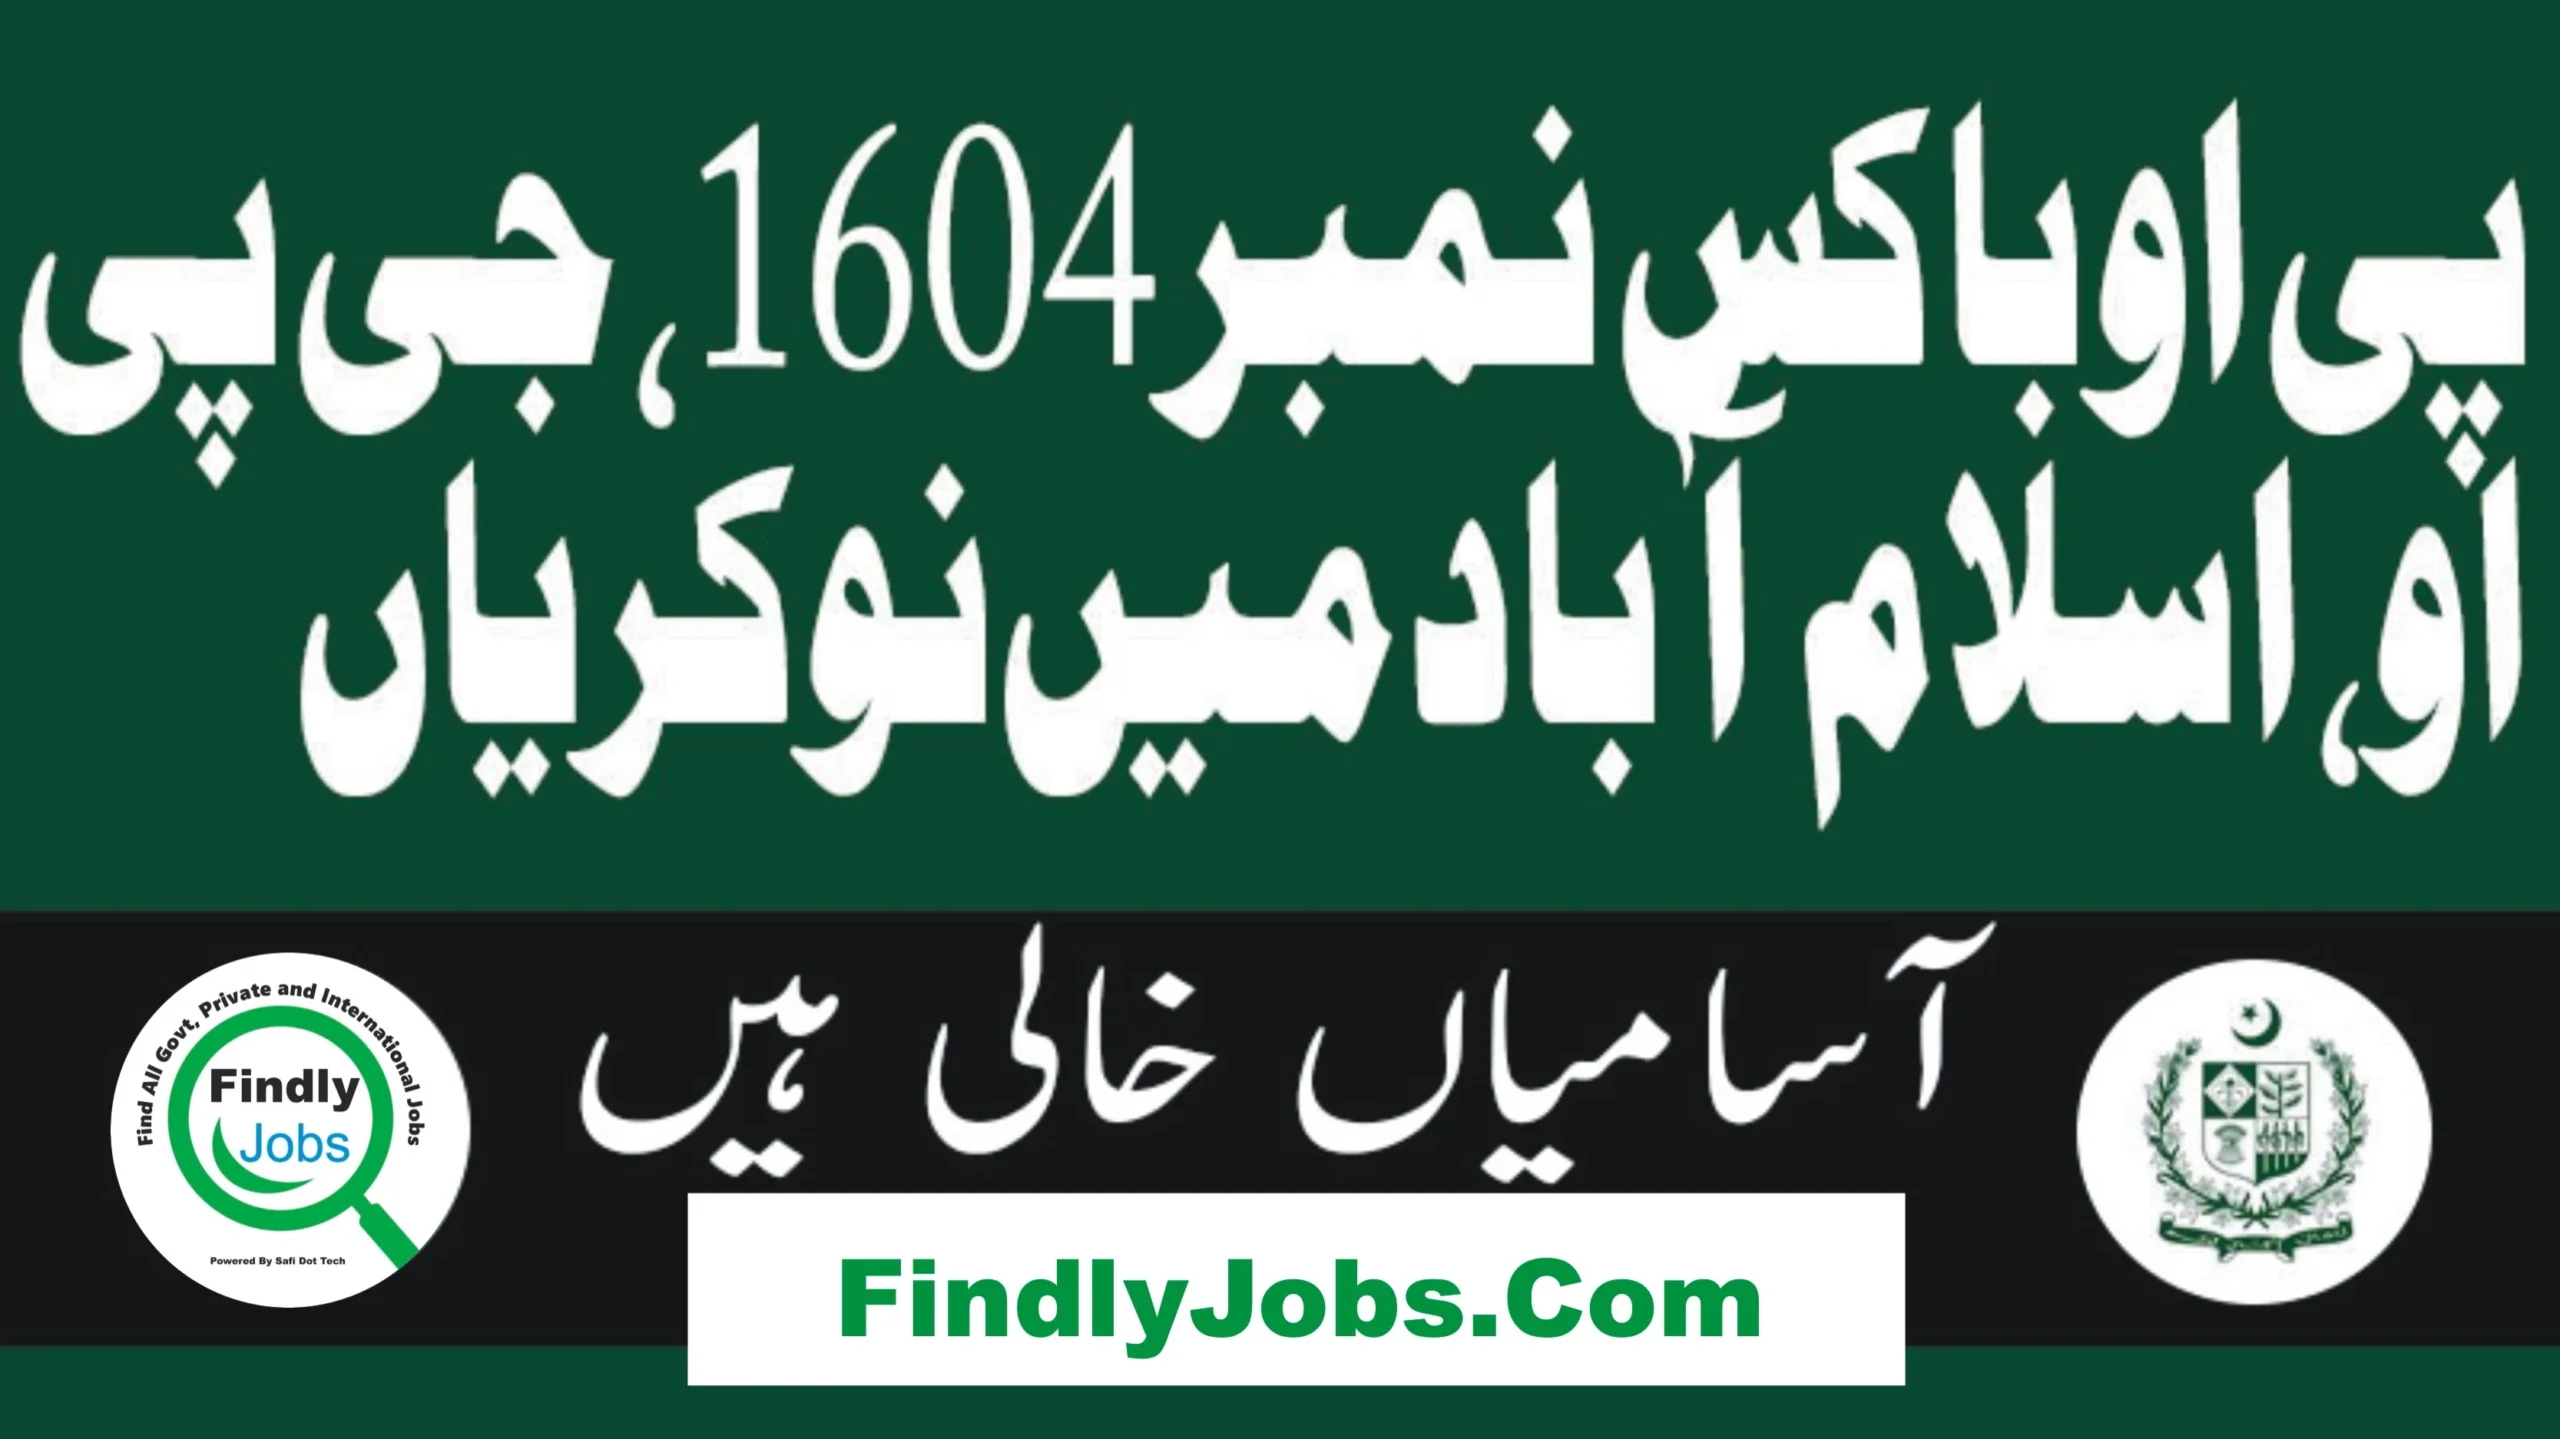 PO Box 1604 Islamabad Jobs 2024 - Application Form Download